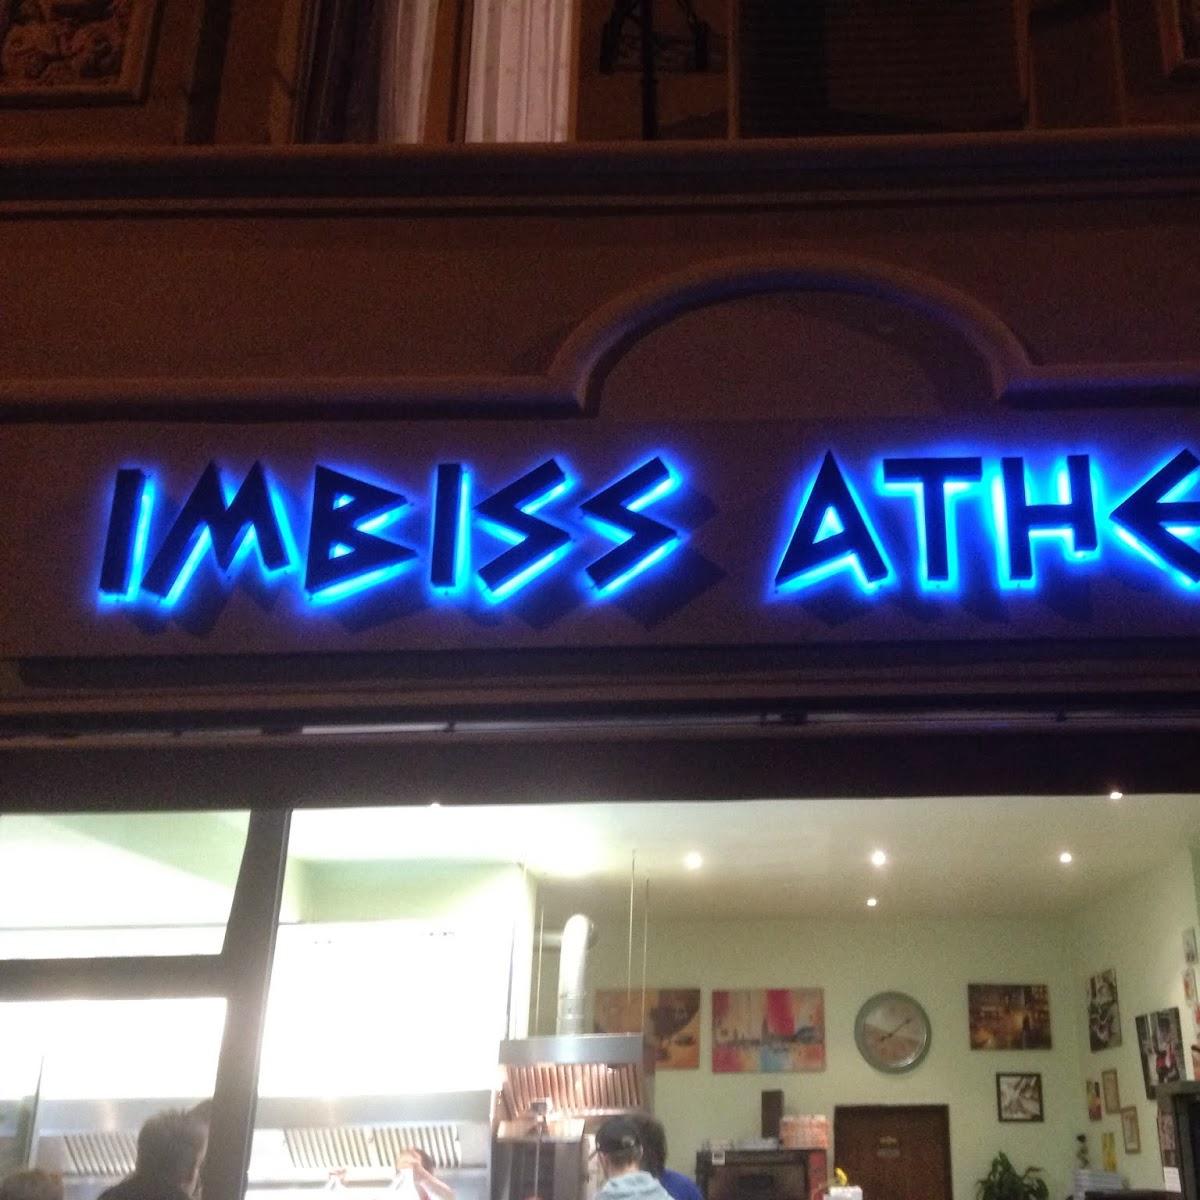 Restaurant "Imbiss Athena" in Köln